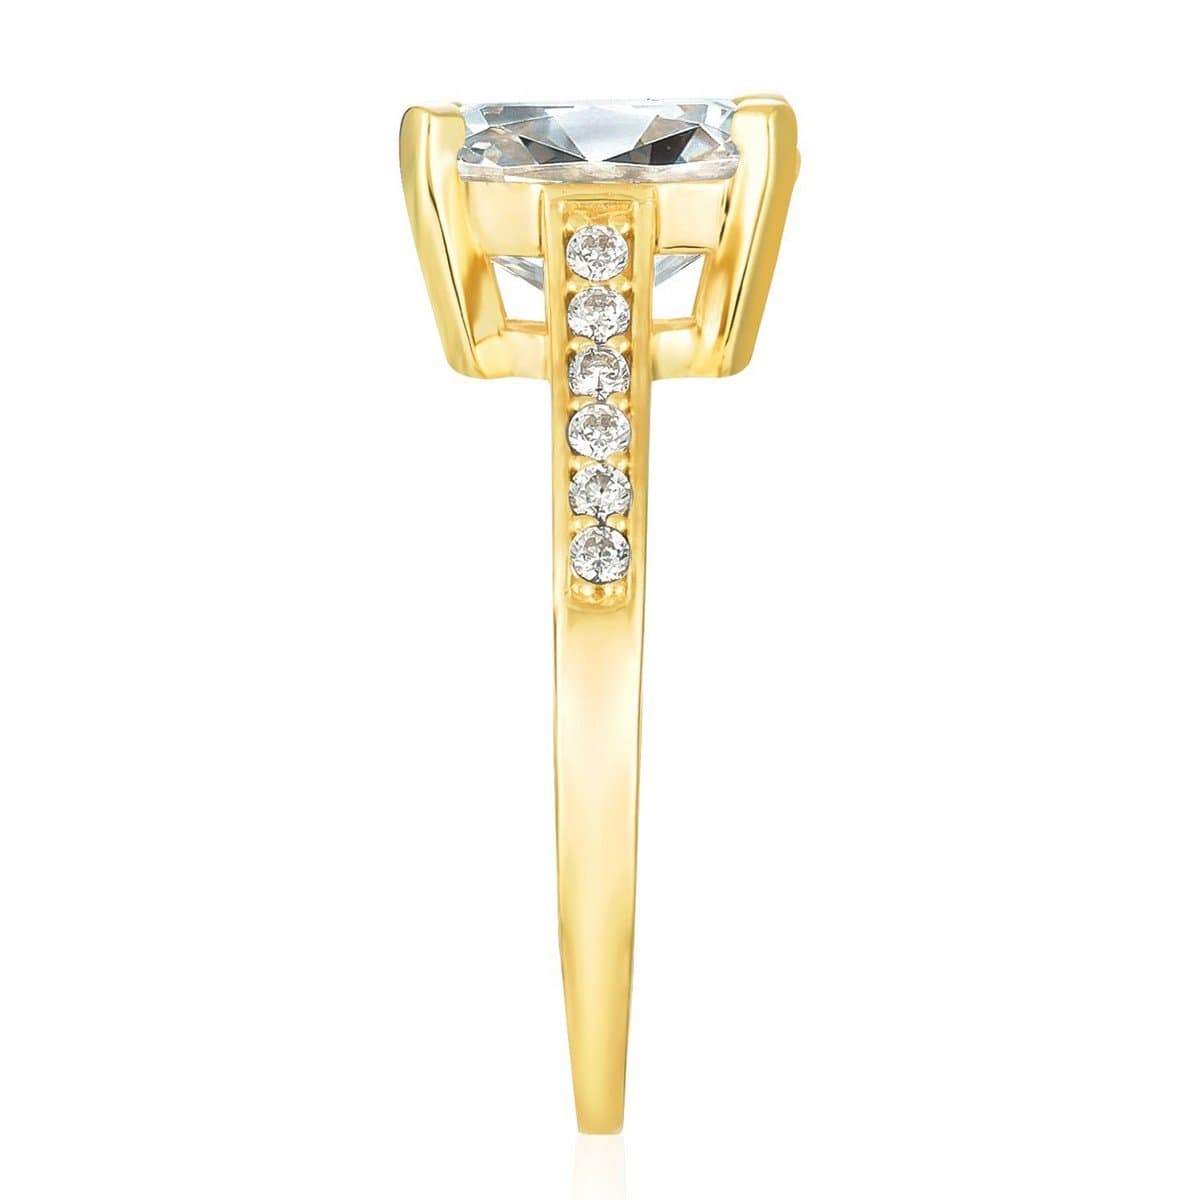 Crislu Jewelry CRISLU Radiant Cushion Cut Ring finished in 18KT Gold - Size 8